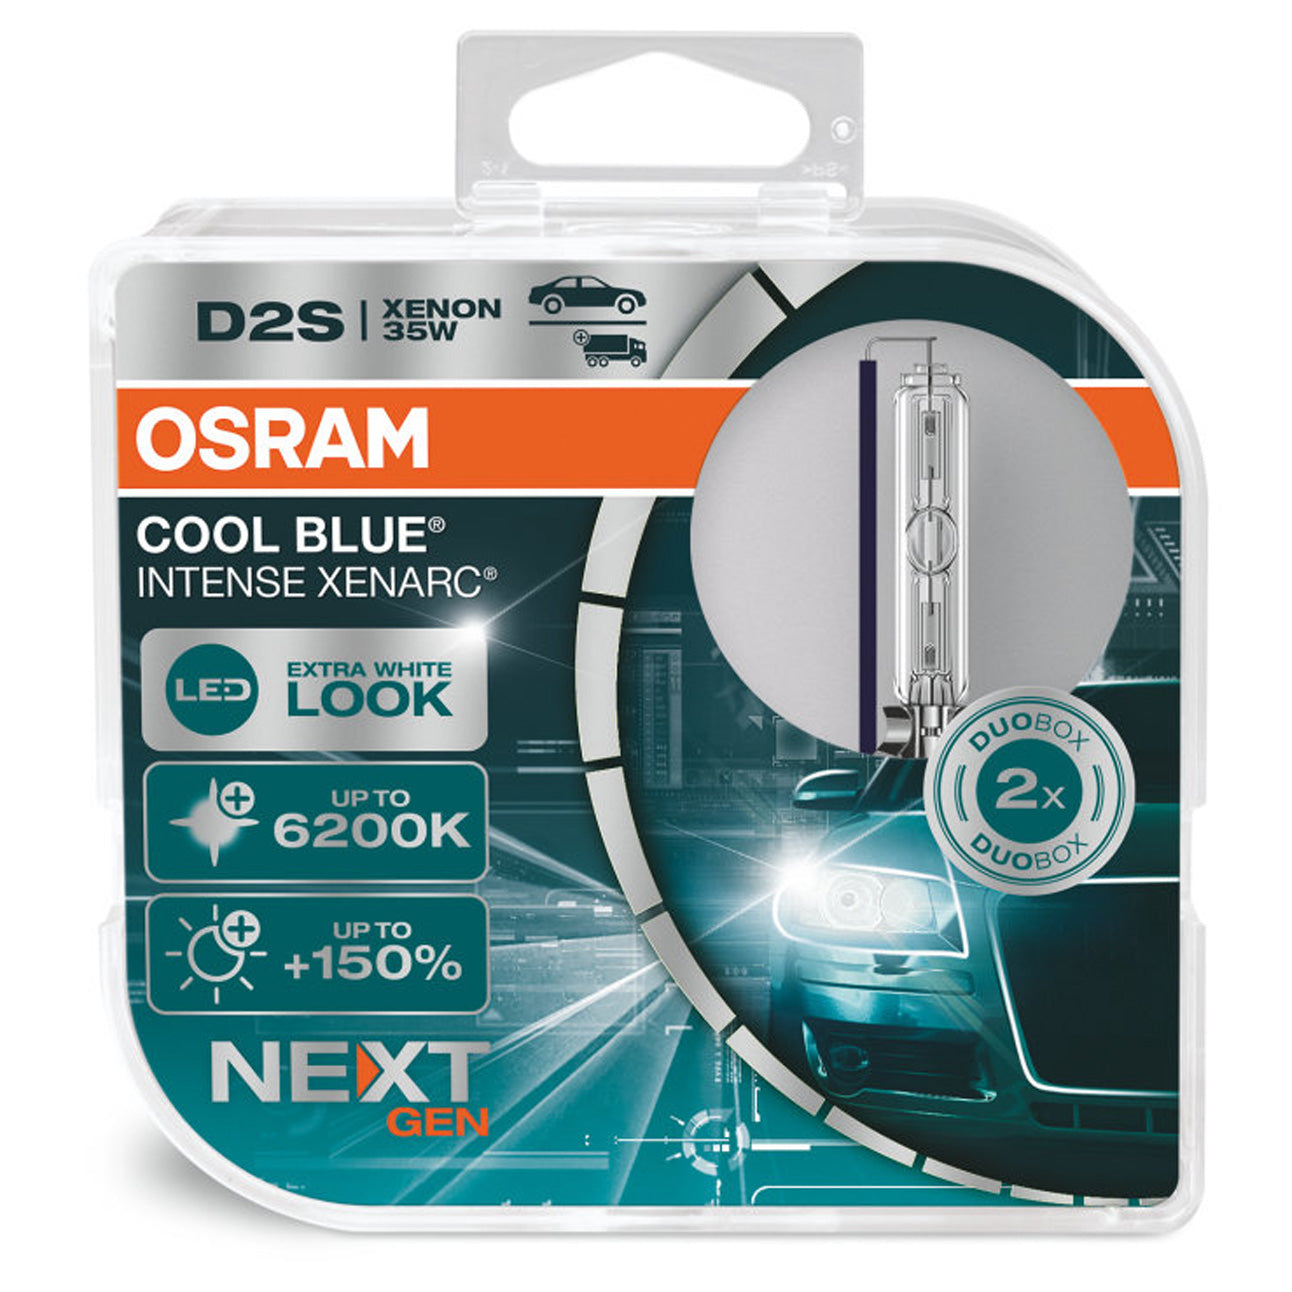 OSRAM XENARC ORIGINAL D2S HID Xenon Lamp 66240 35W 